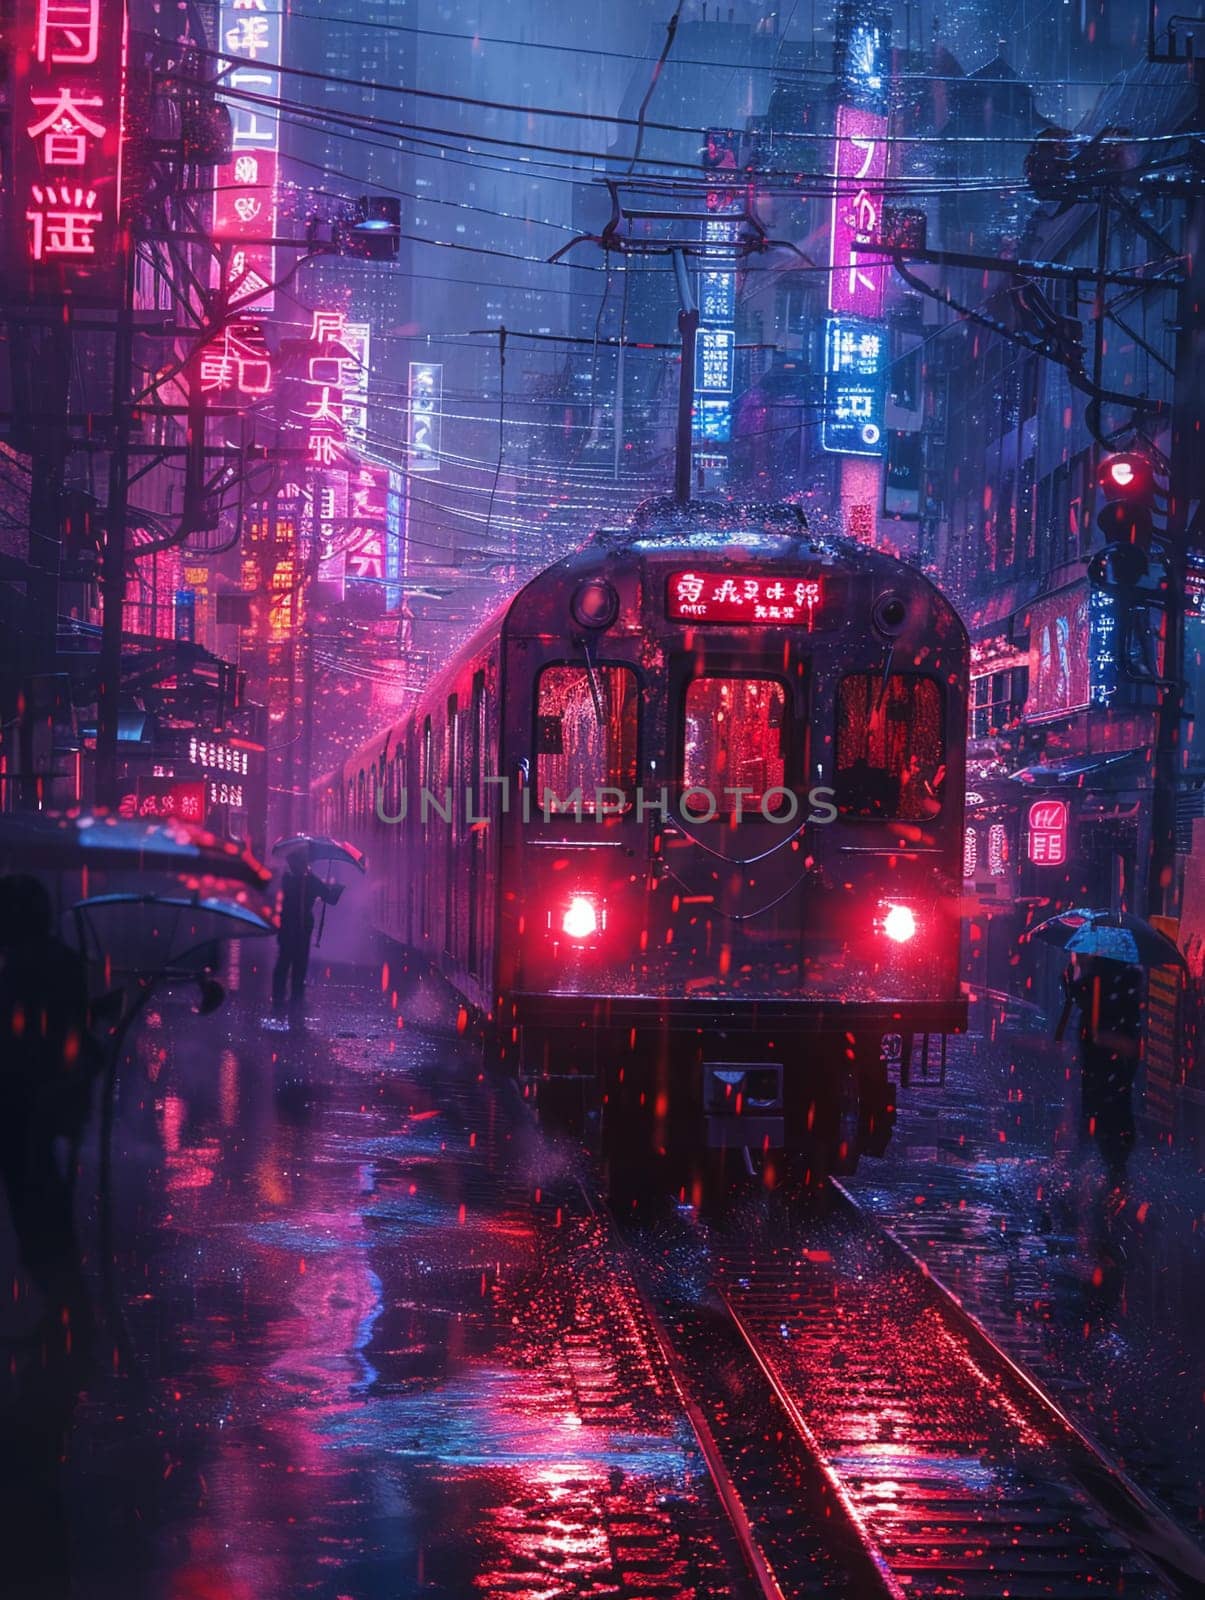 Night train arrival captured in a futuristic by Benzoix